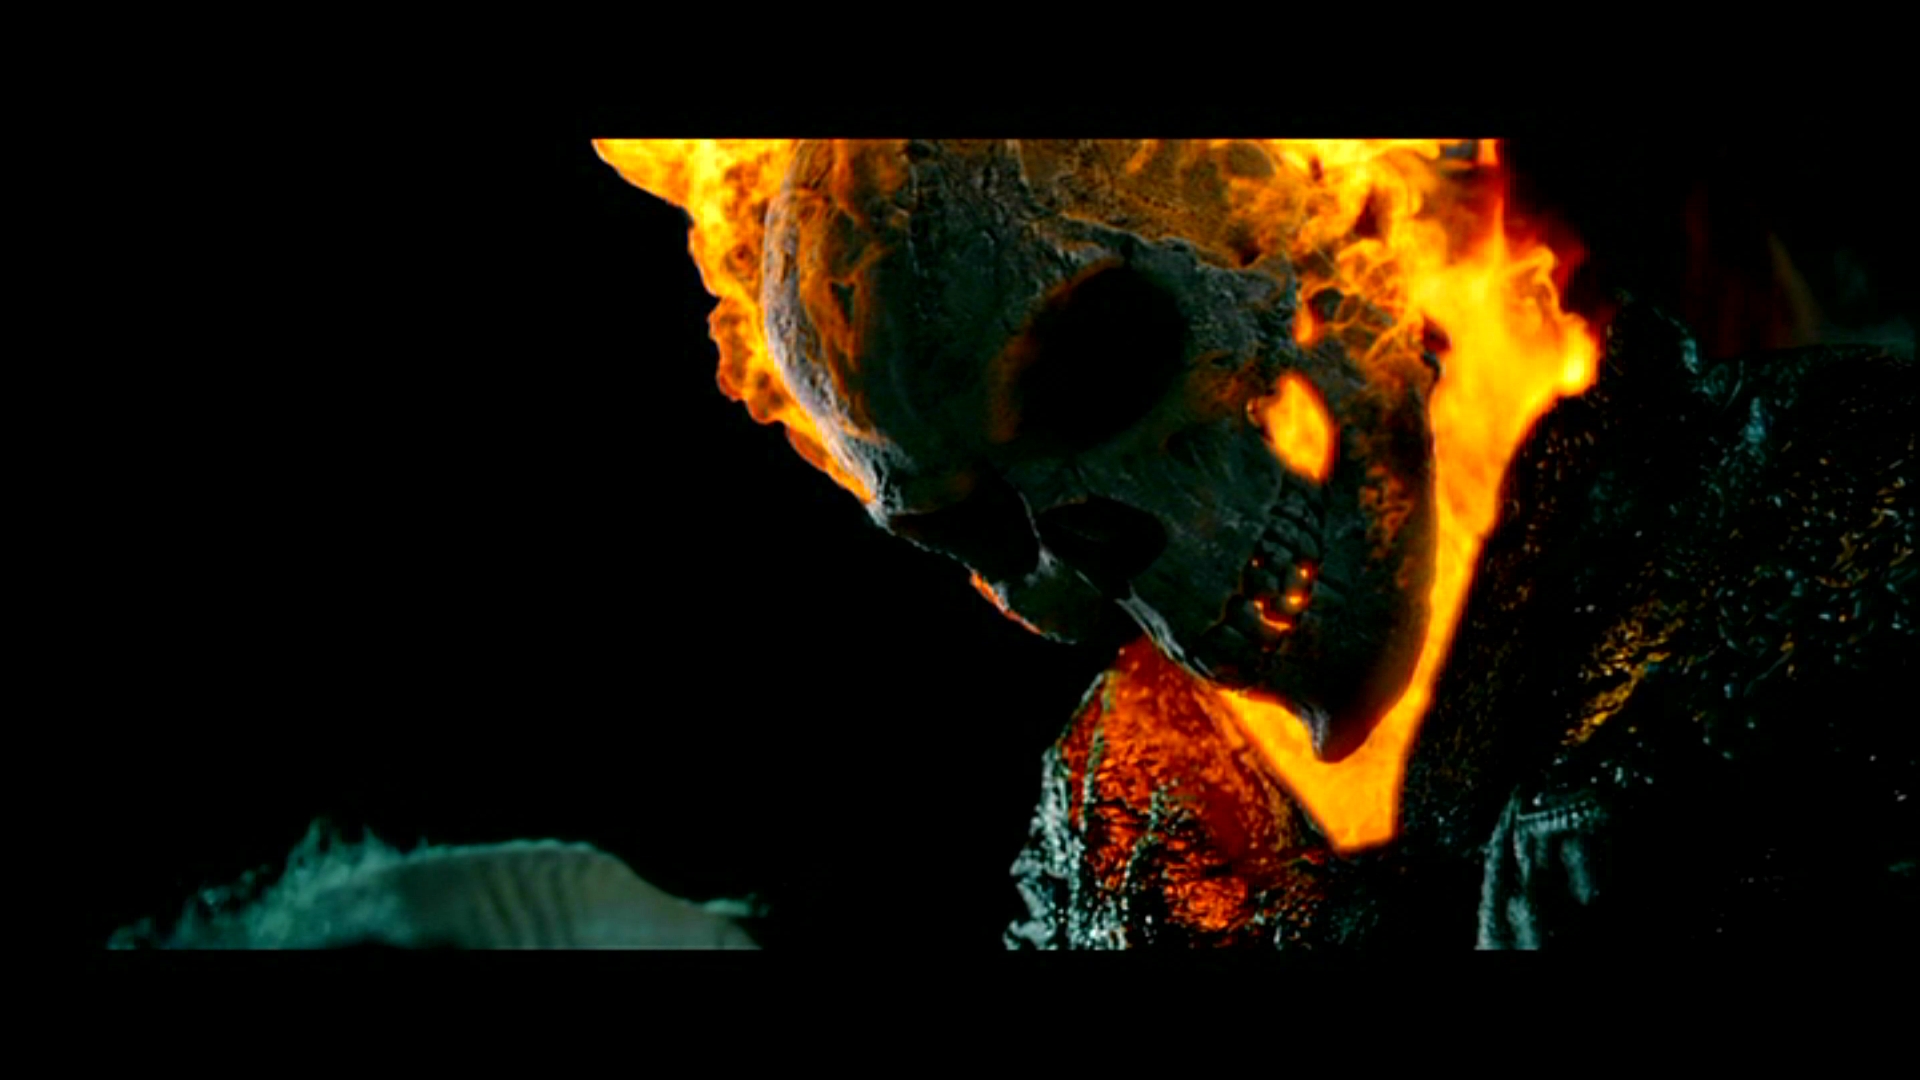 Movie Ghost Rider: Spirit of Vengeance HD Wallpaper | Background Image